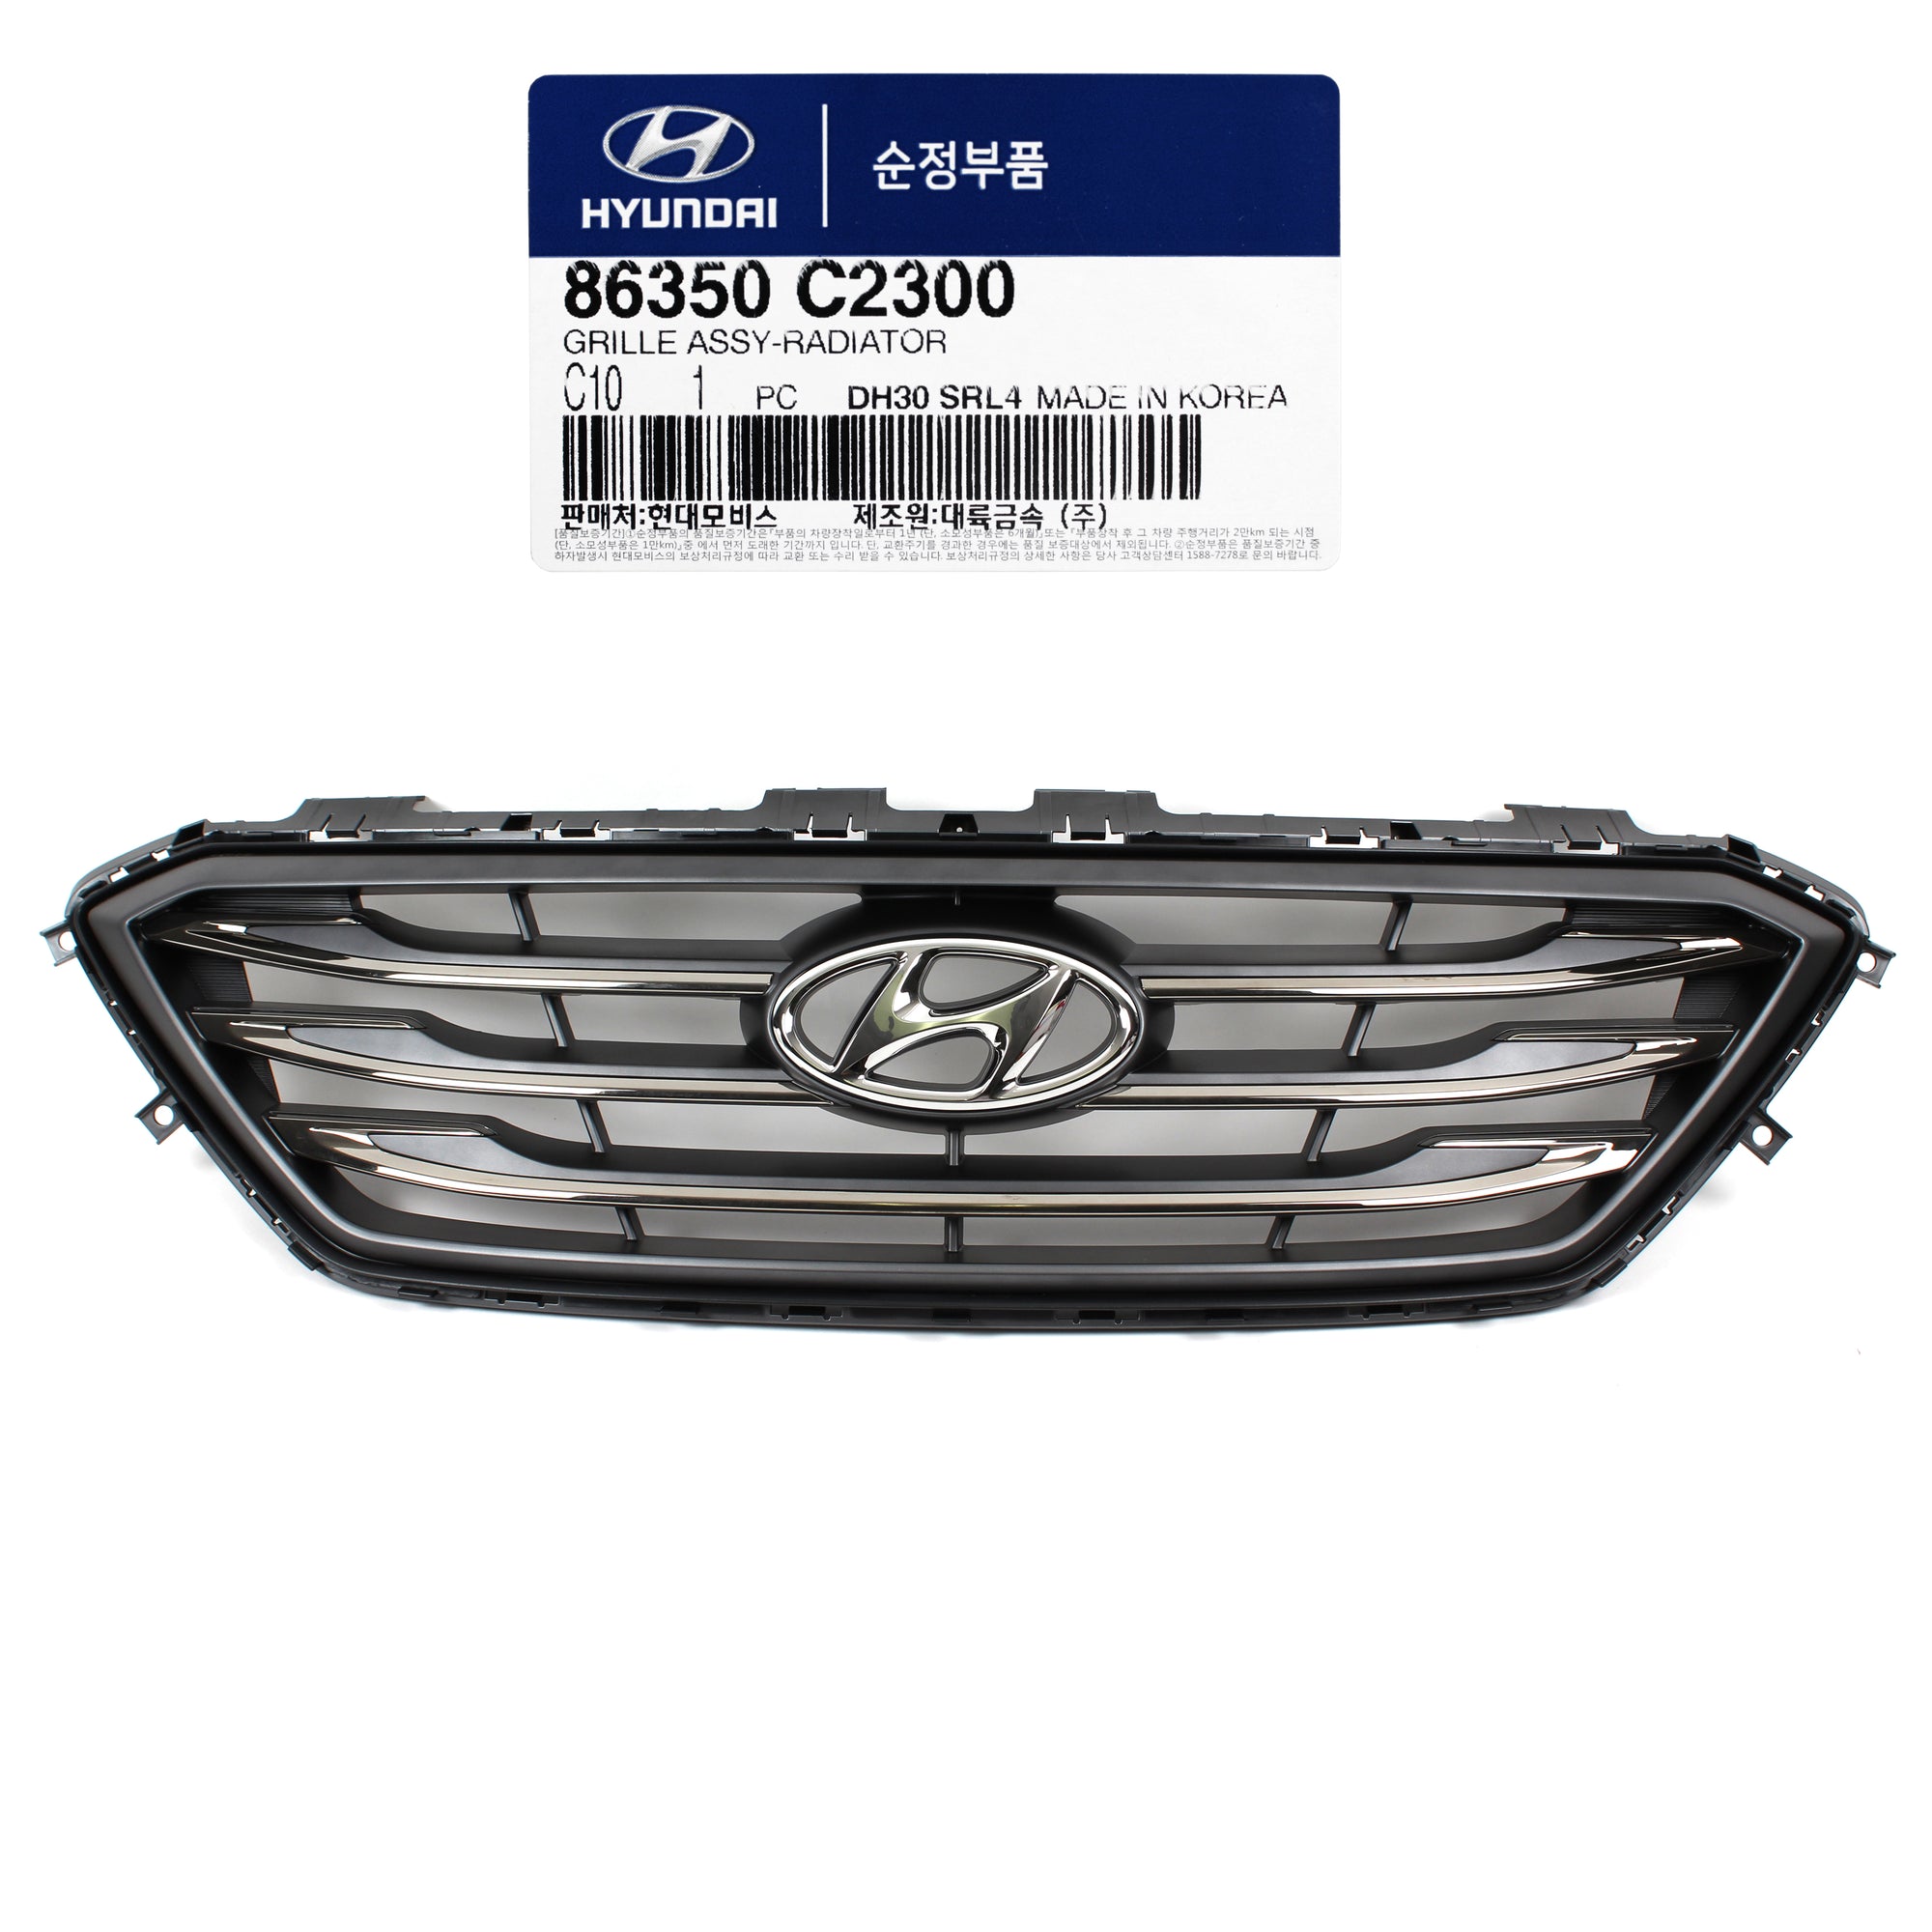 GENUINE OEM Radiator Grille for 2015-2017 Hyundai Sonata Turbo OEM 86350C2300